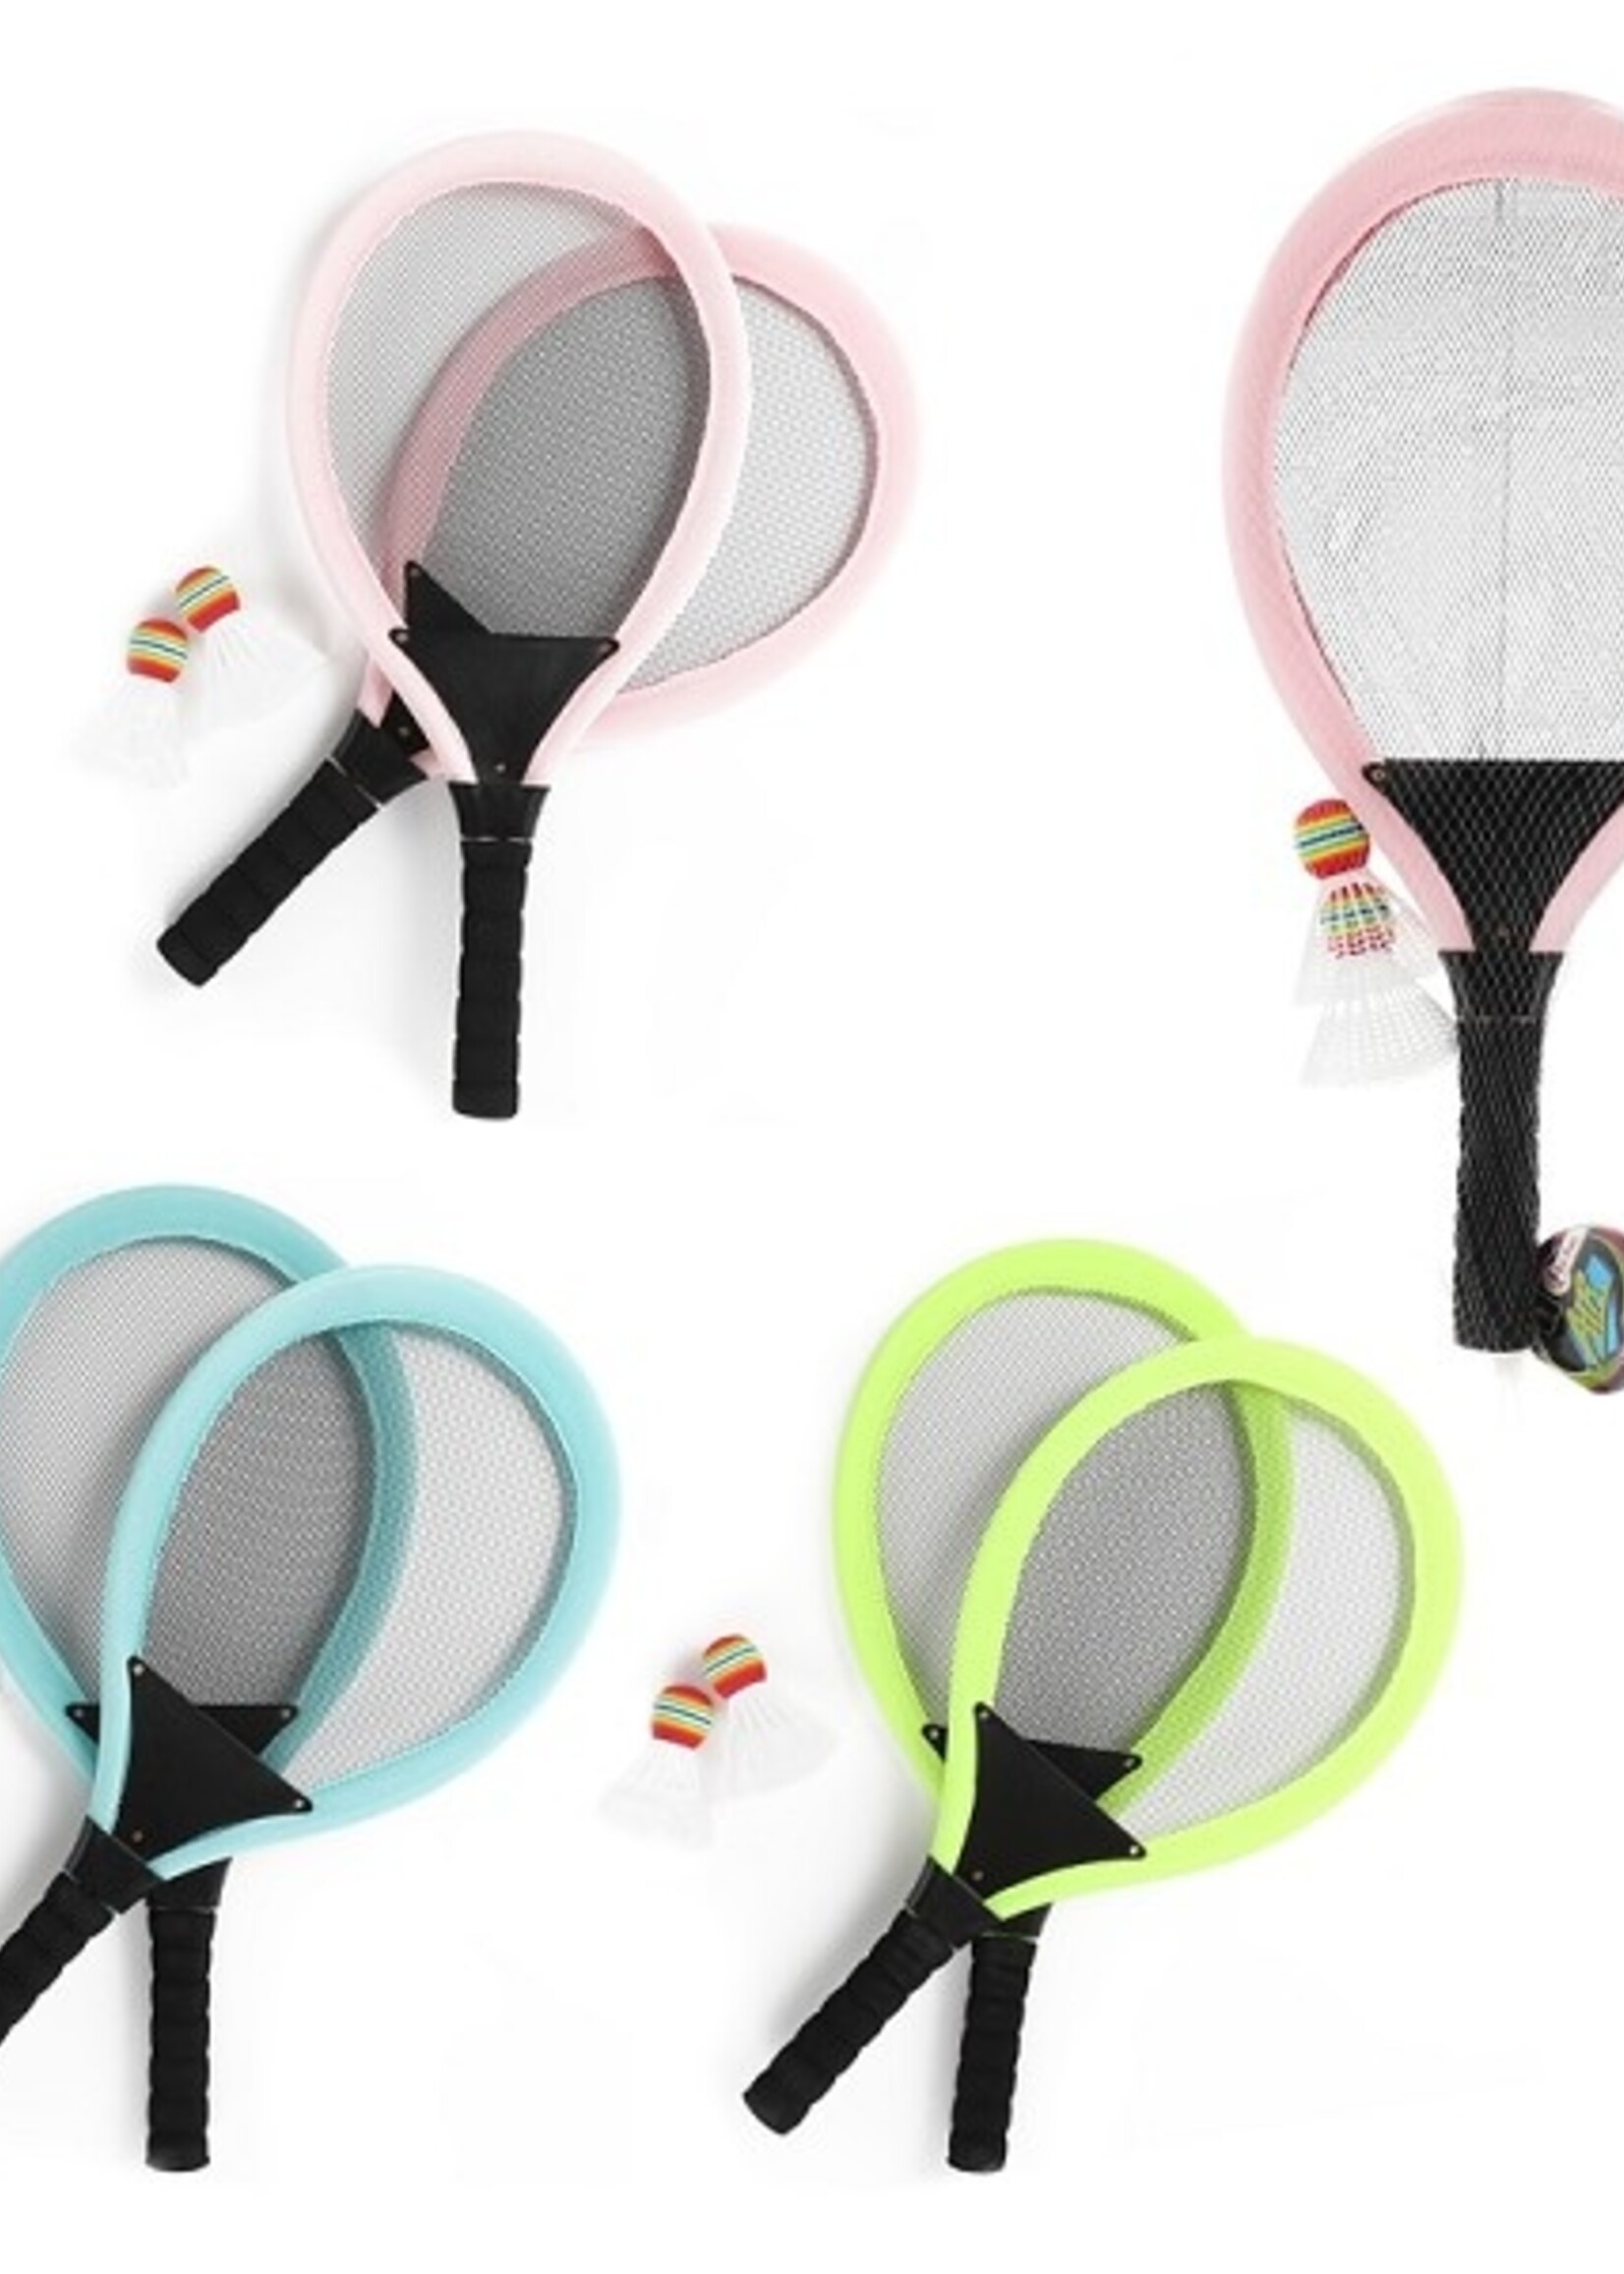 Toi Toys AIR Badmintonset -2 rackets +2 shutles